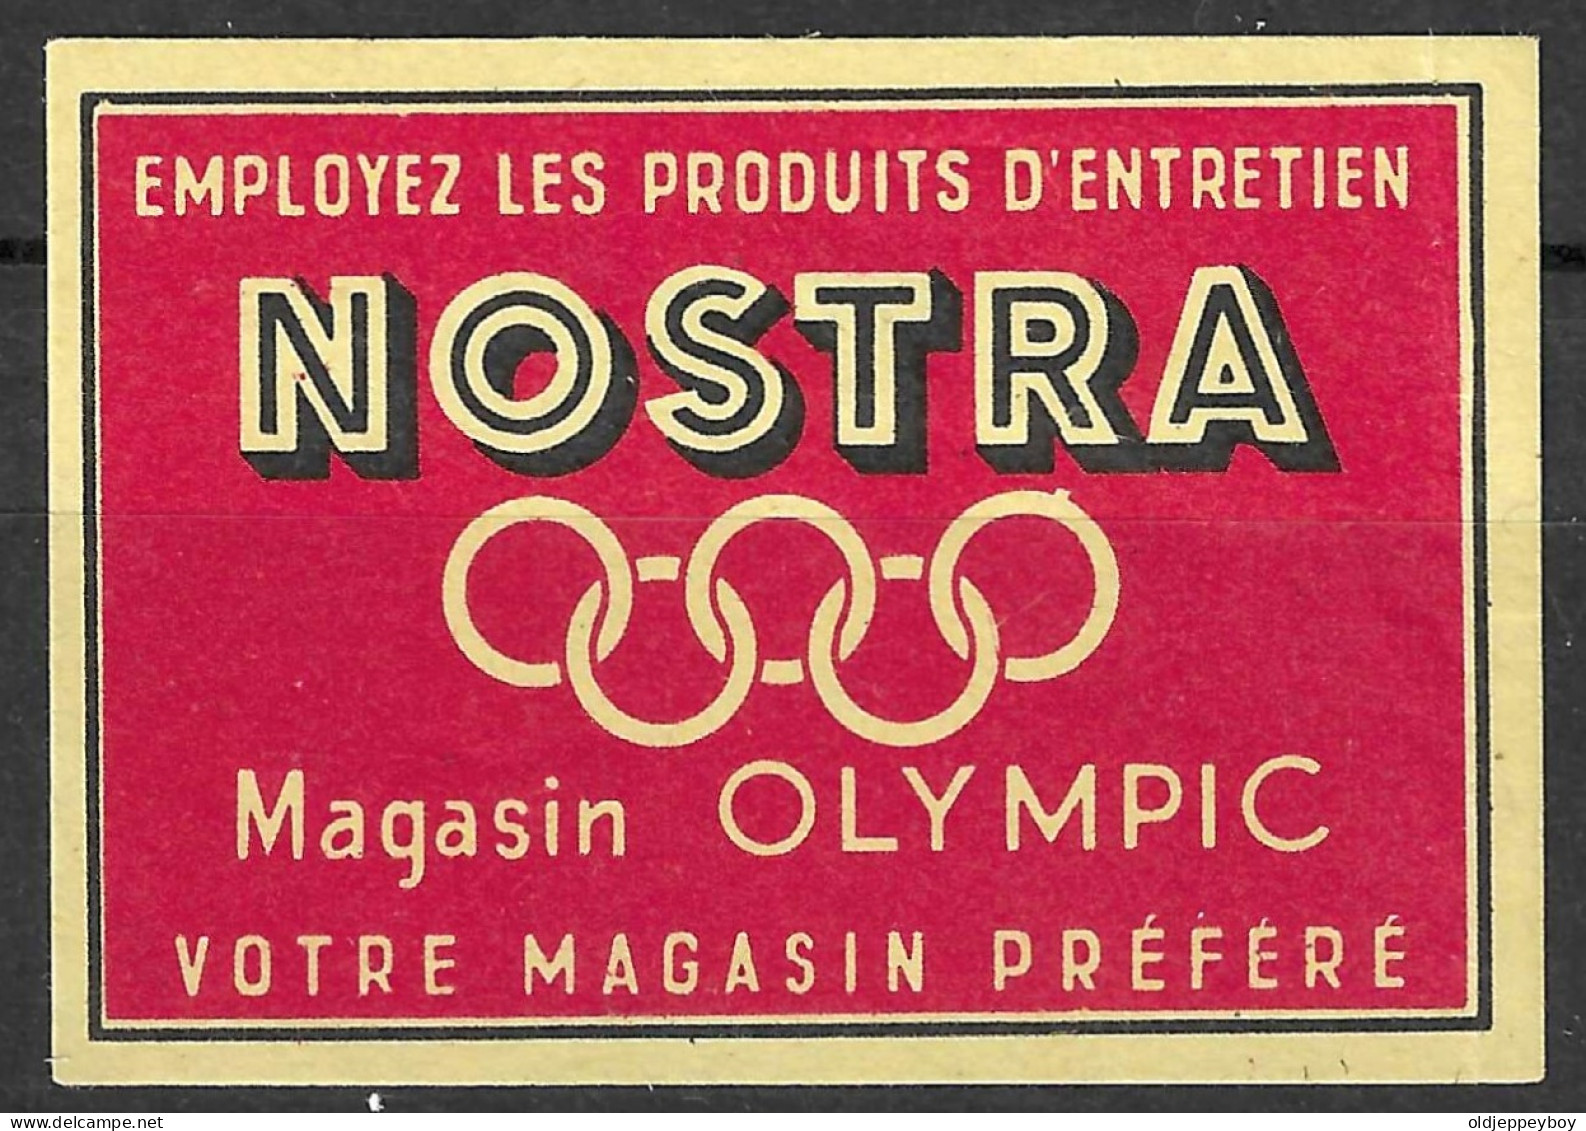  VINTAGE MATCHBOX LABEL BELGIUM 1920 Games In Antwerp  NOSTRA MAGASIN OLYMPIC VOTRE MAGASIN PREFERE   5  X 3.5  Cm  - Zündholzschachteletiketten